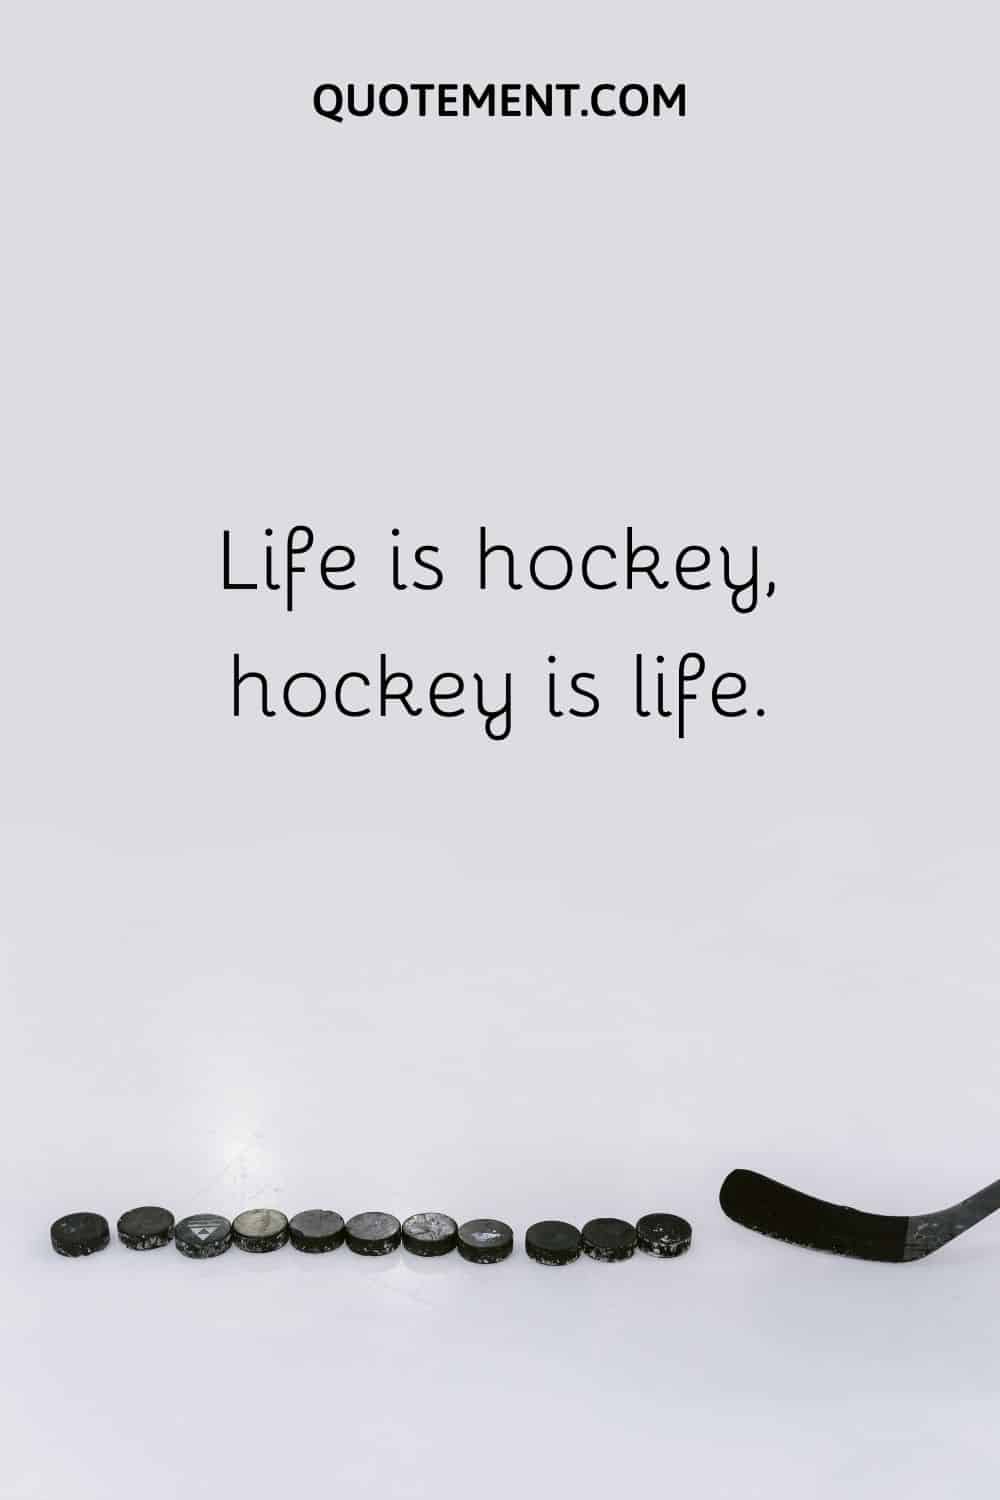 Life is hockey, hockey is life.